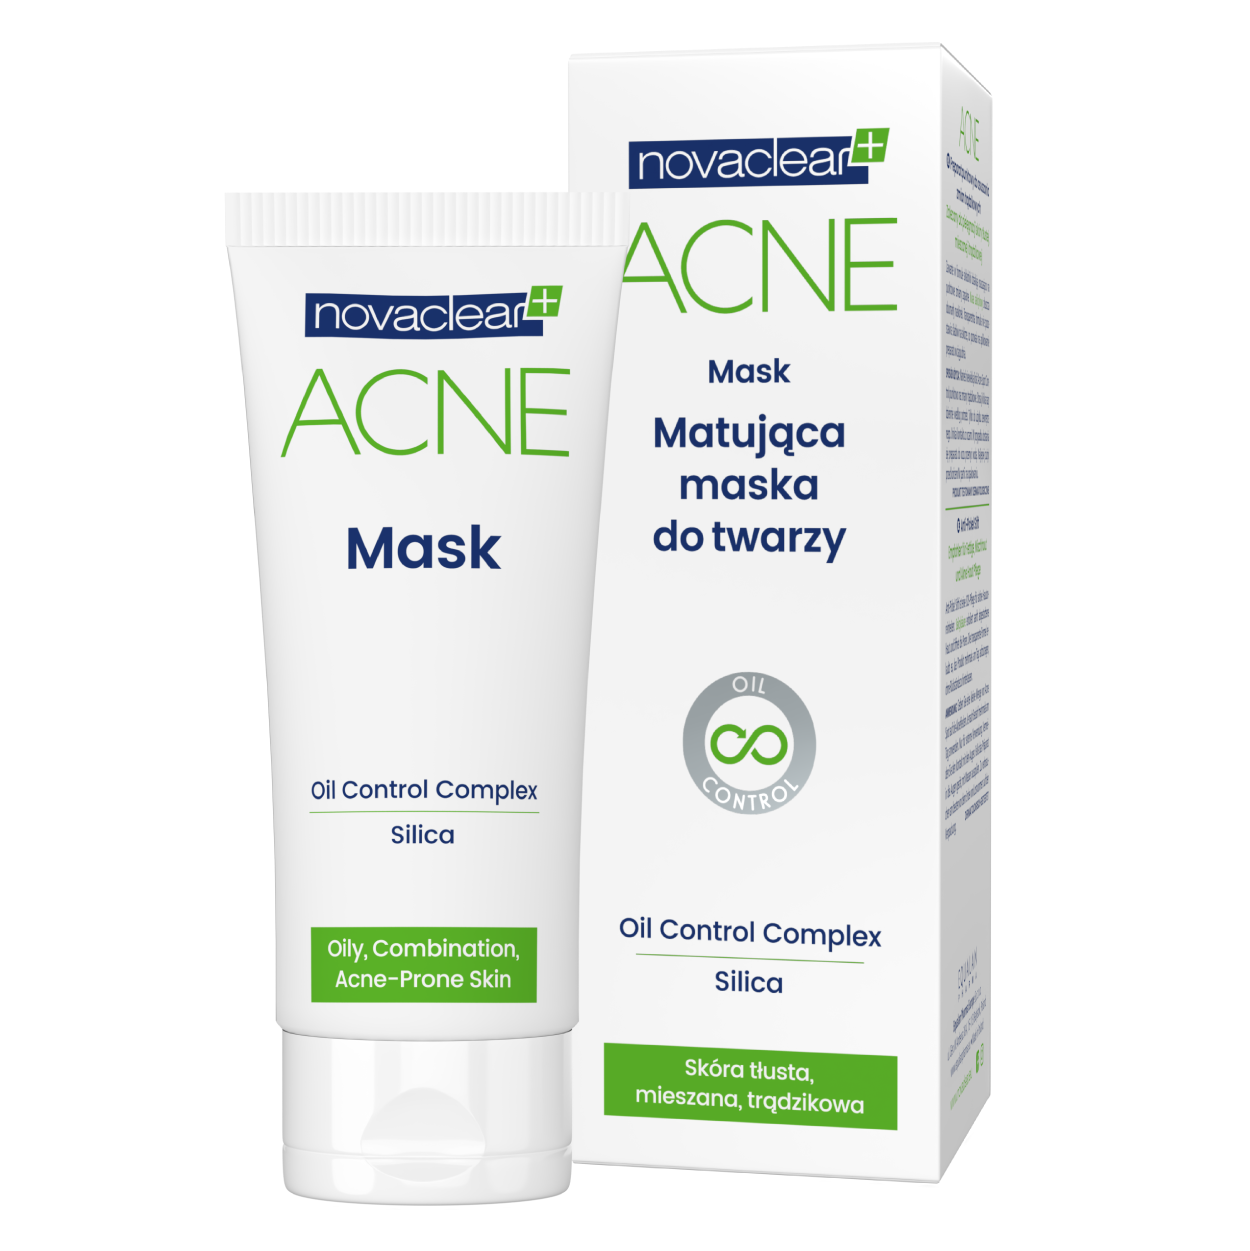 novaclear-acne-matujaca-maska-do-twarzy